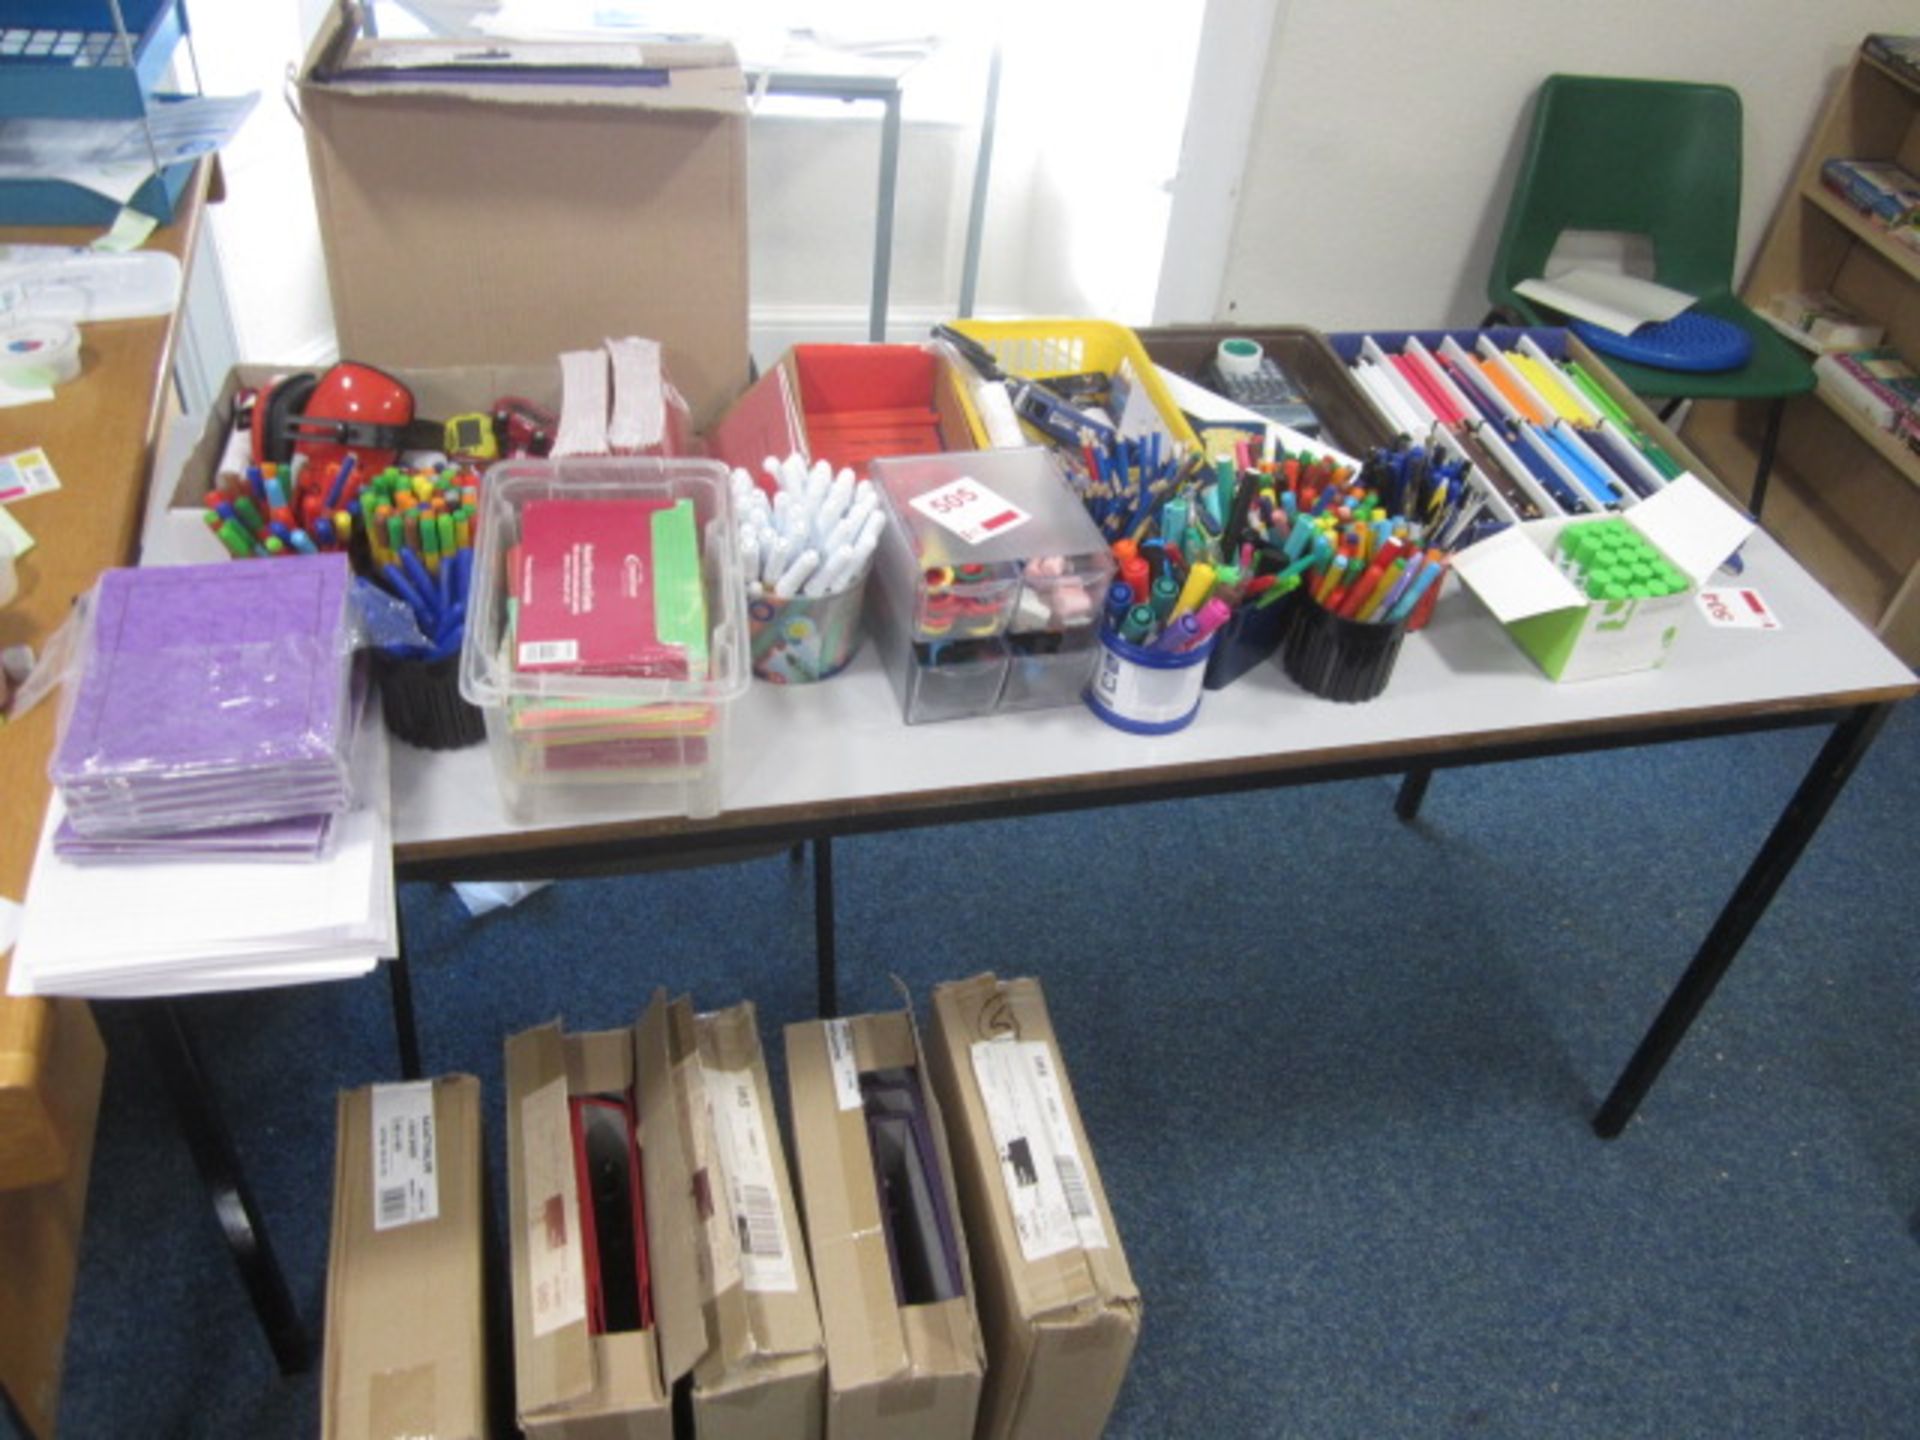 Assorted sundries including coloured pencils, pens, glue sticks, record cards, school exercise